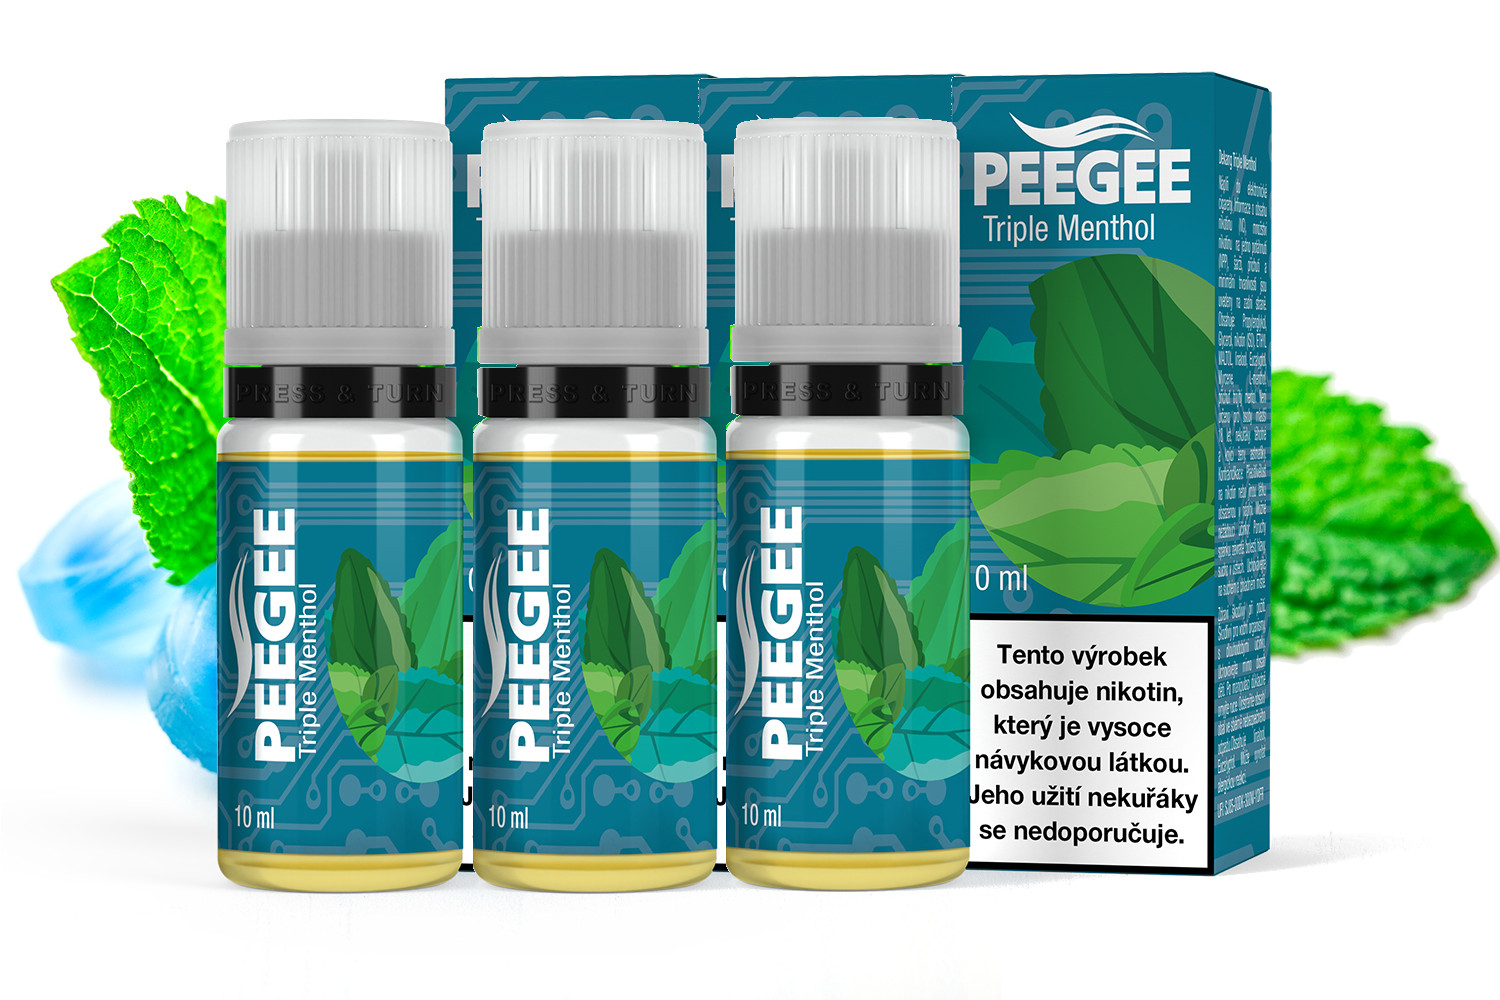 PEEGEE - Trojitý mentol (Triple Menthol) 3x10ml Obsah nikotinu: 18mg